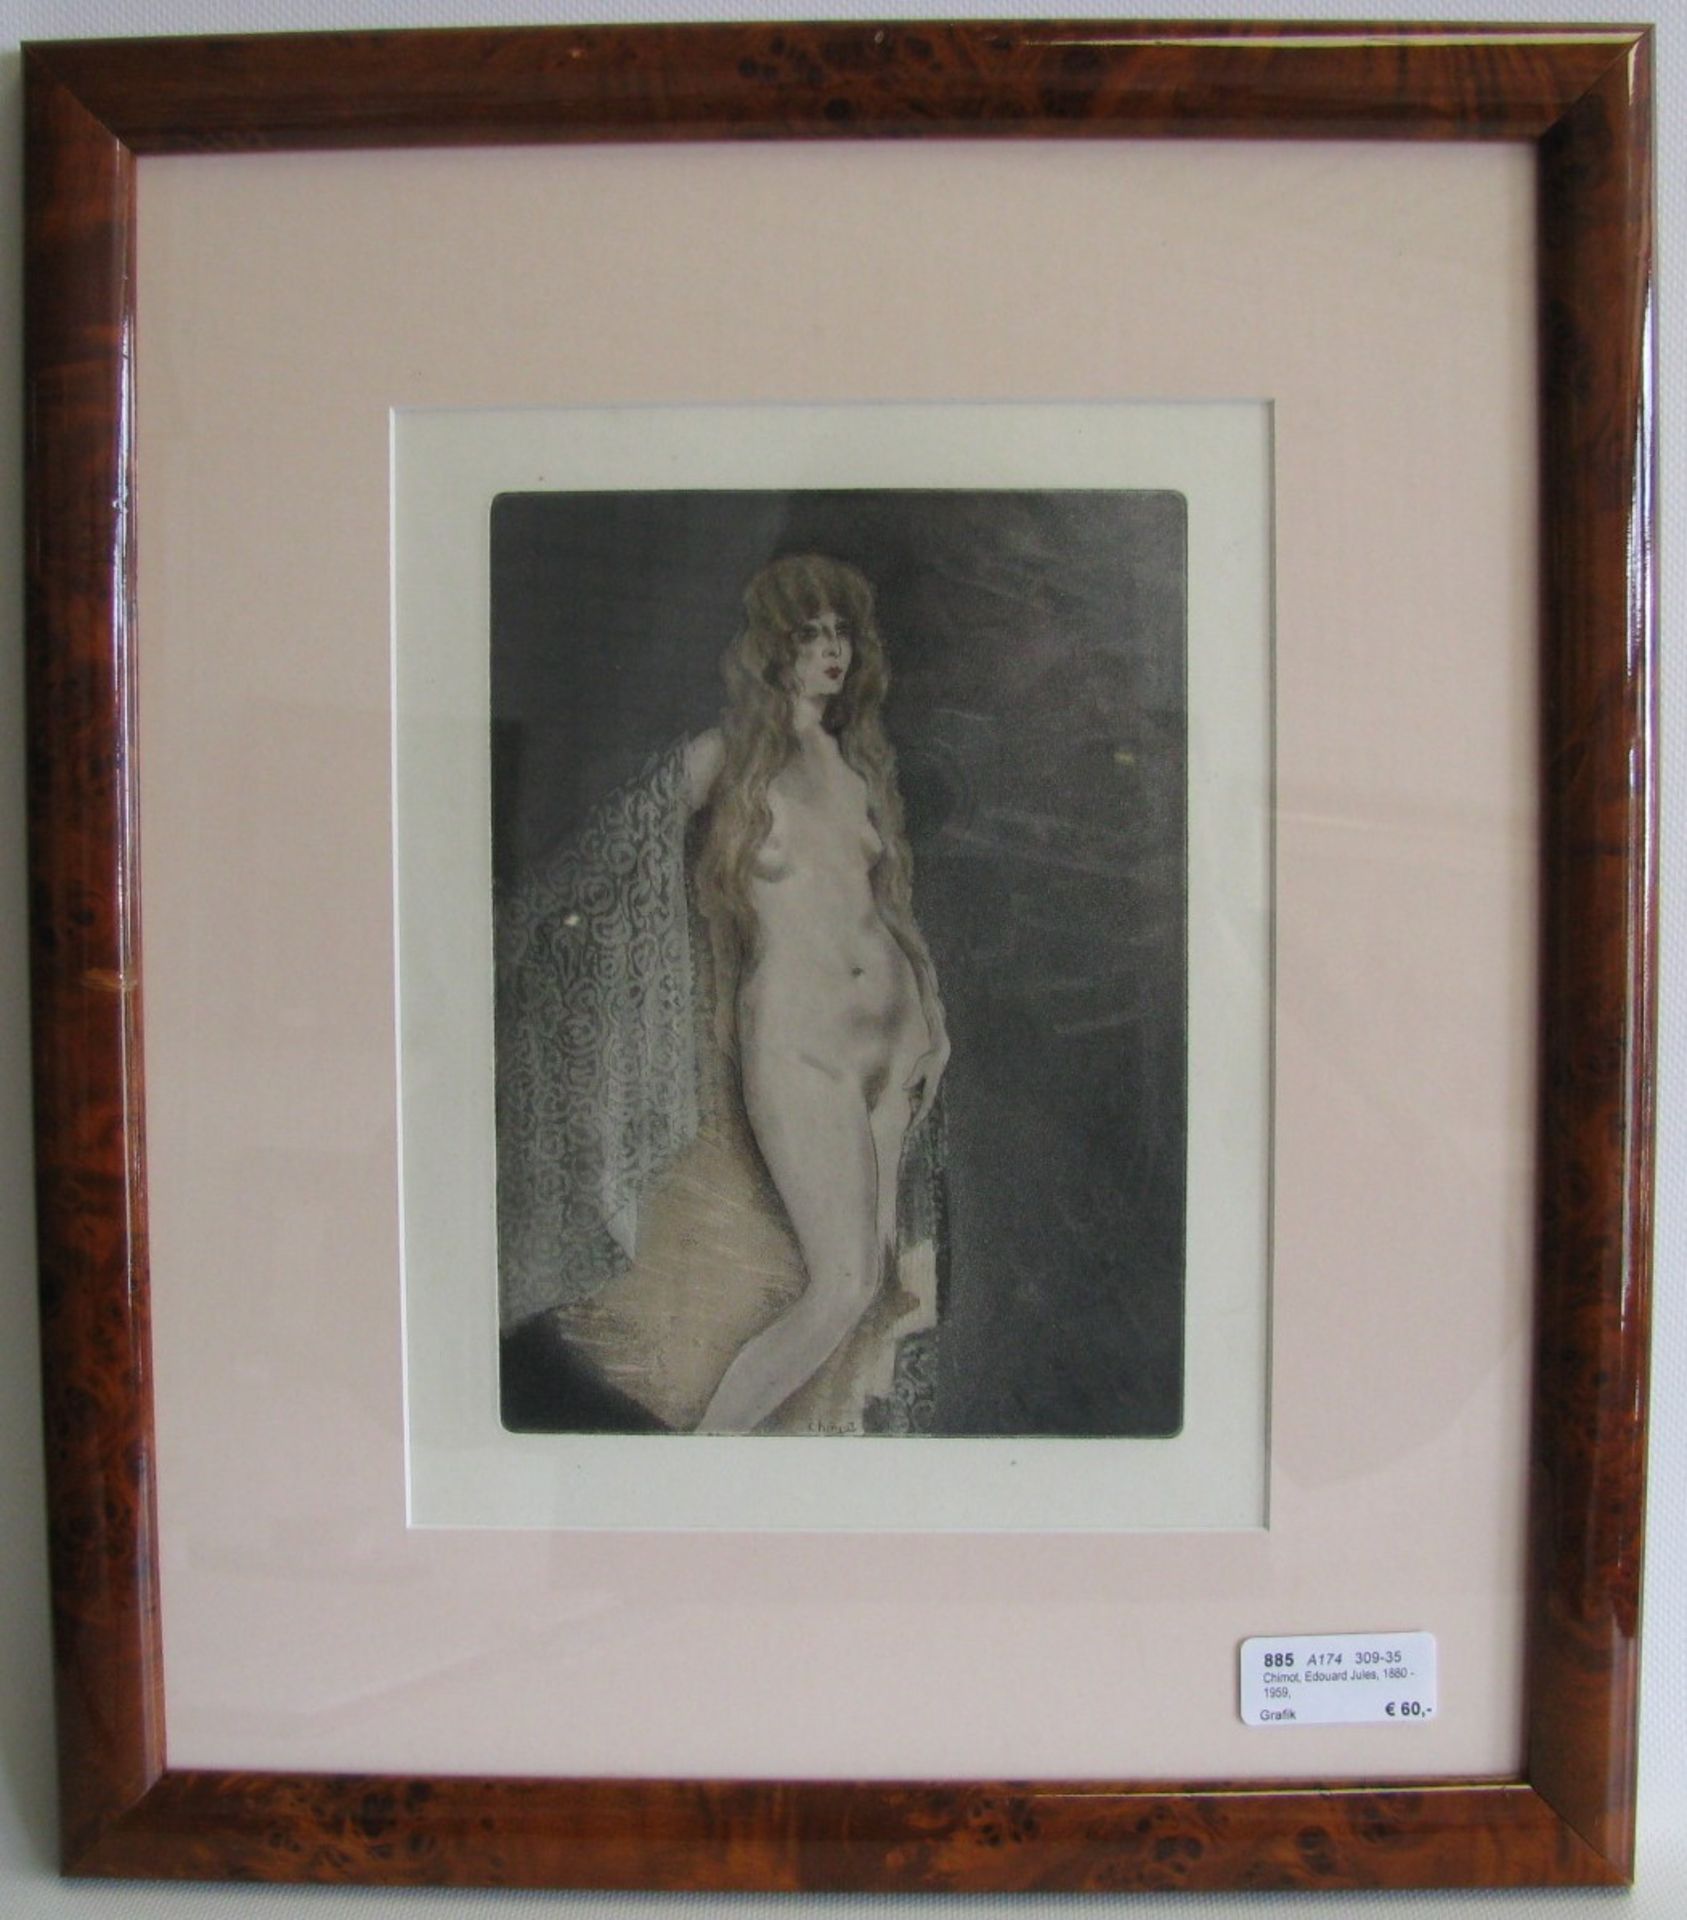 Chimot, Edouard Jules, 1880 - 1959, "Weiblicher Akt", Farblithografie, i.d.Pl.sign., 21,5 x 16 cm, - Image 2 of 2